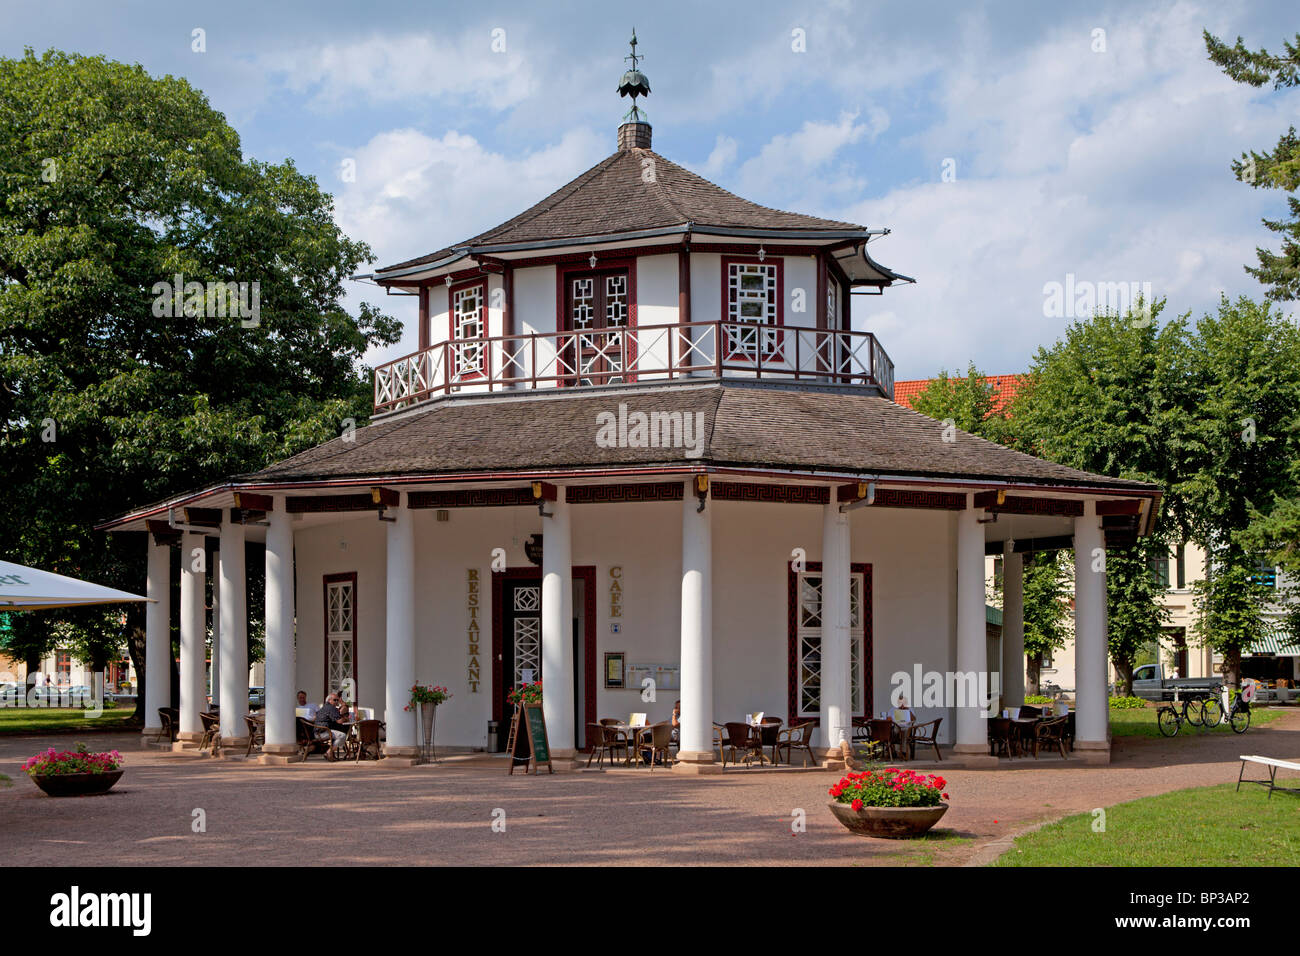 Il Padiglione Cinese presso il parco "Kamp', Bad Doberan, Meclemburgo-Pomerania Occidentale, Germania Foto Stock